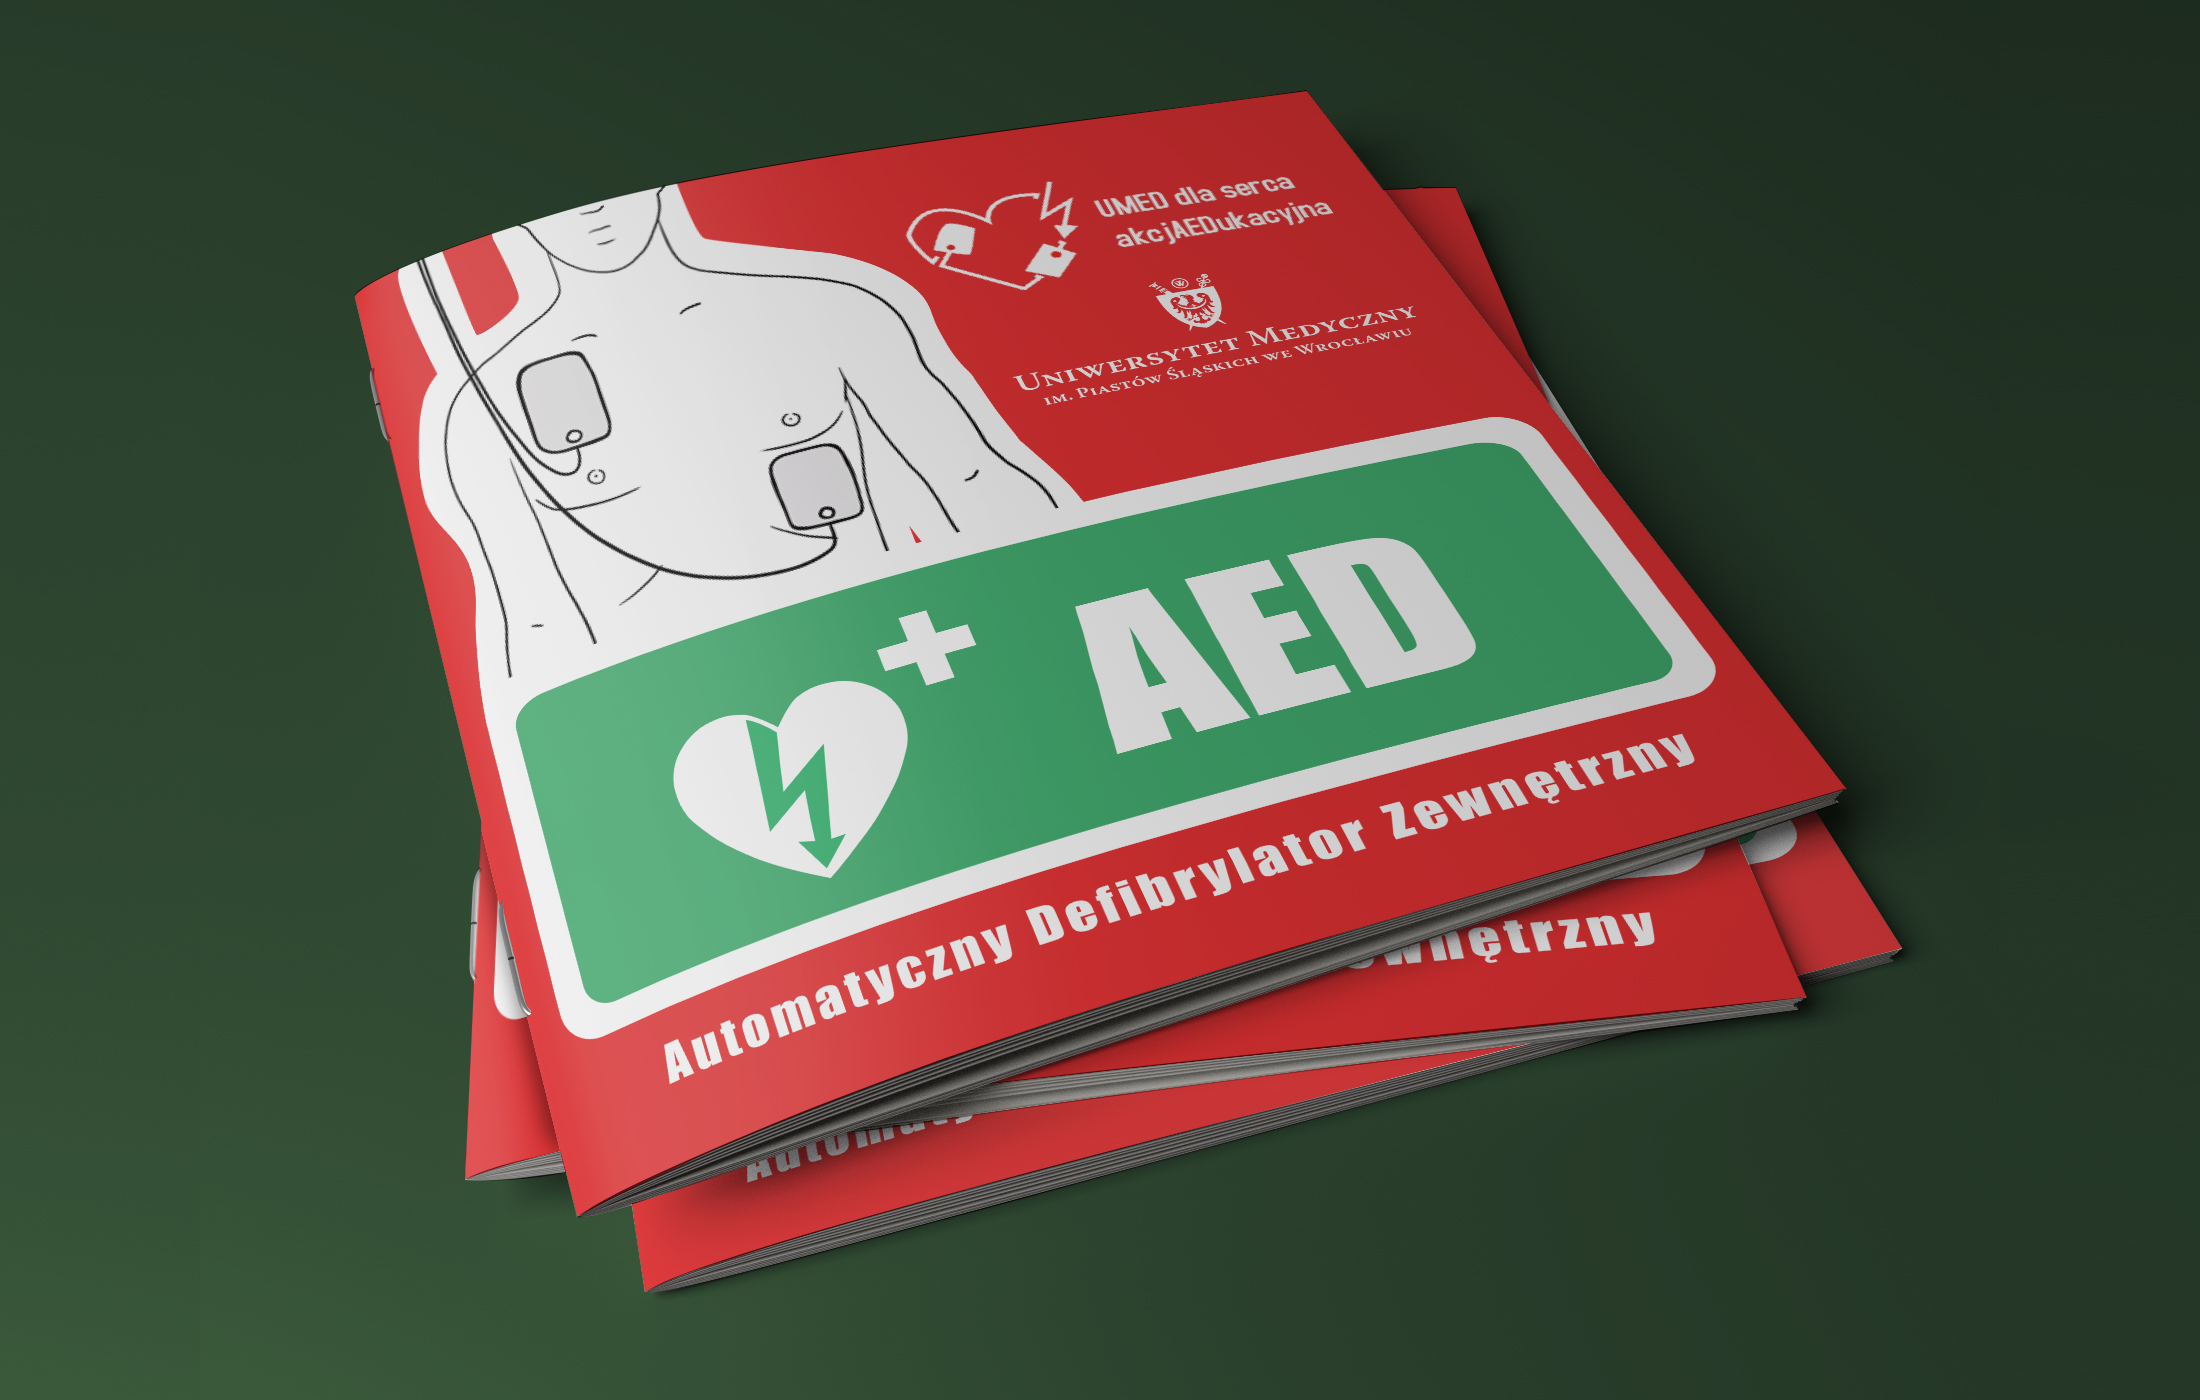 AED instrukcja obsługi